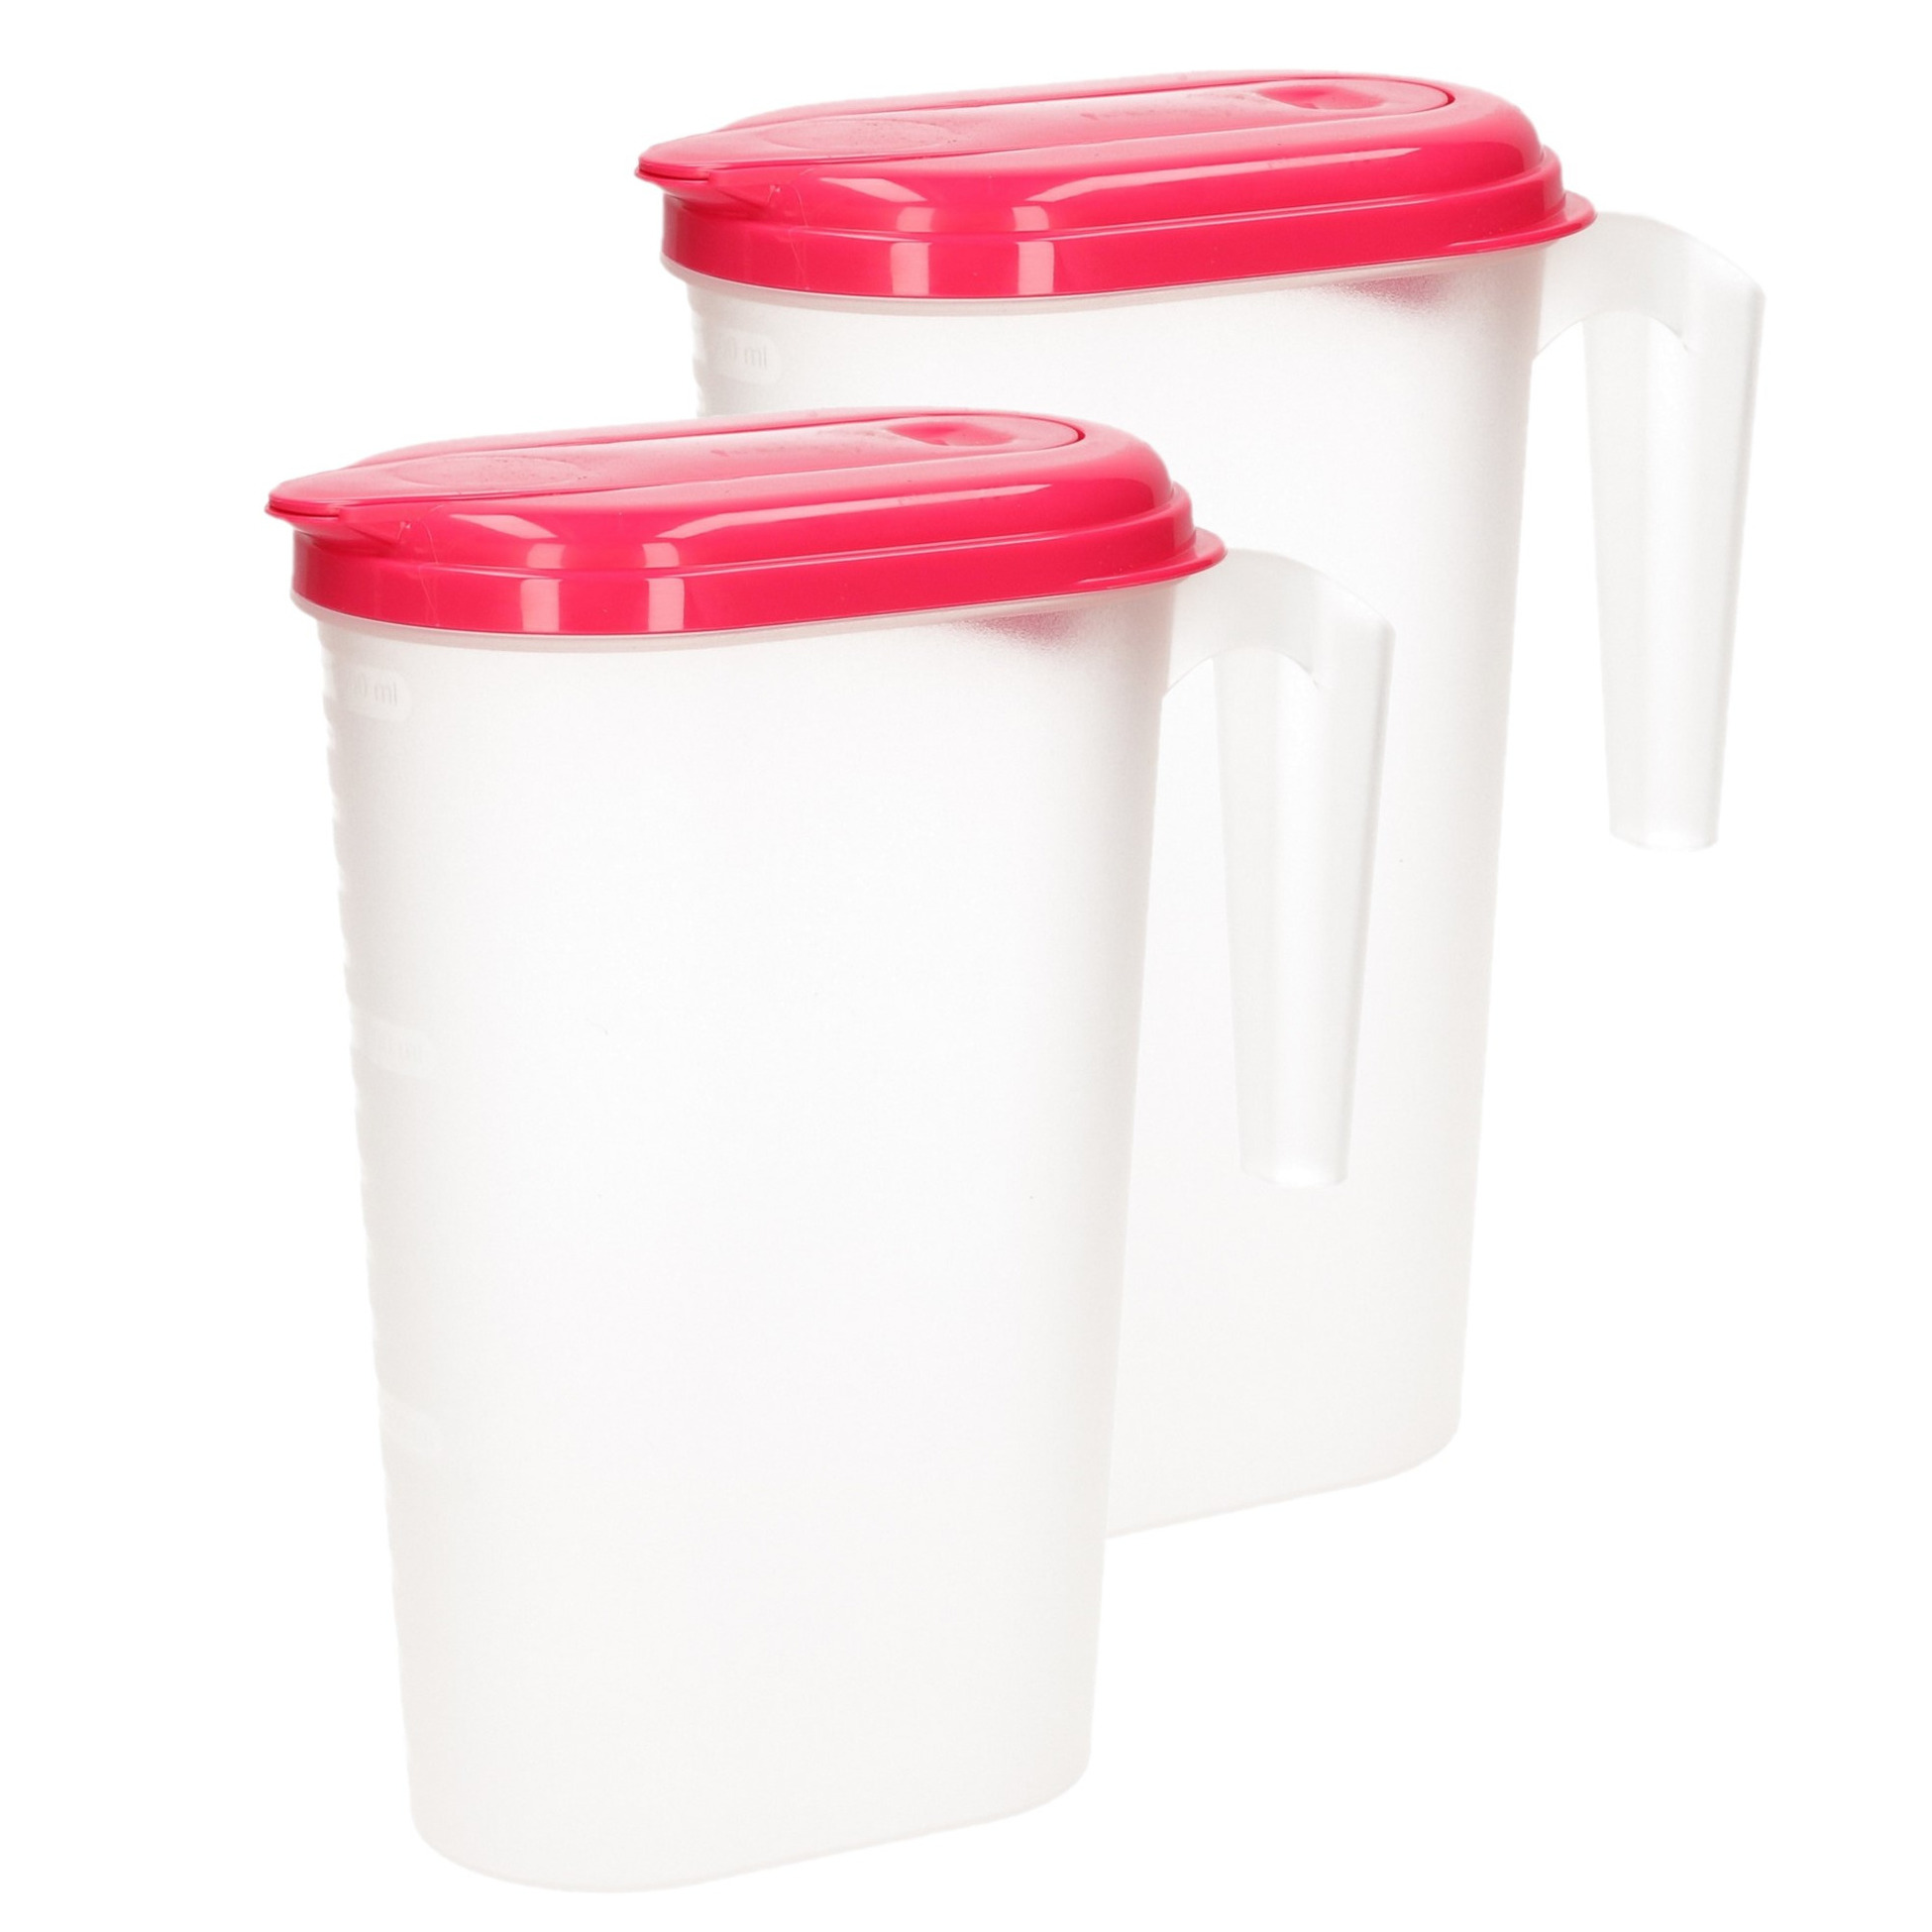 PlasticForte 2x stuks waterkan/sapkan transparant/fuschia roze met deksel 1.6 liter kunststof -